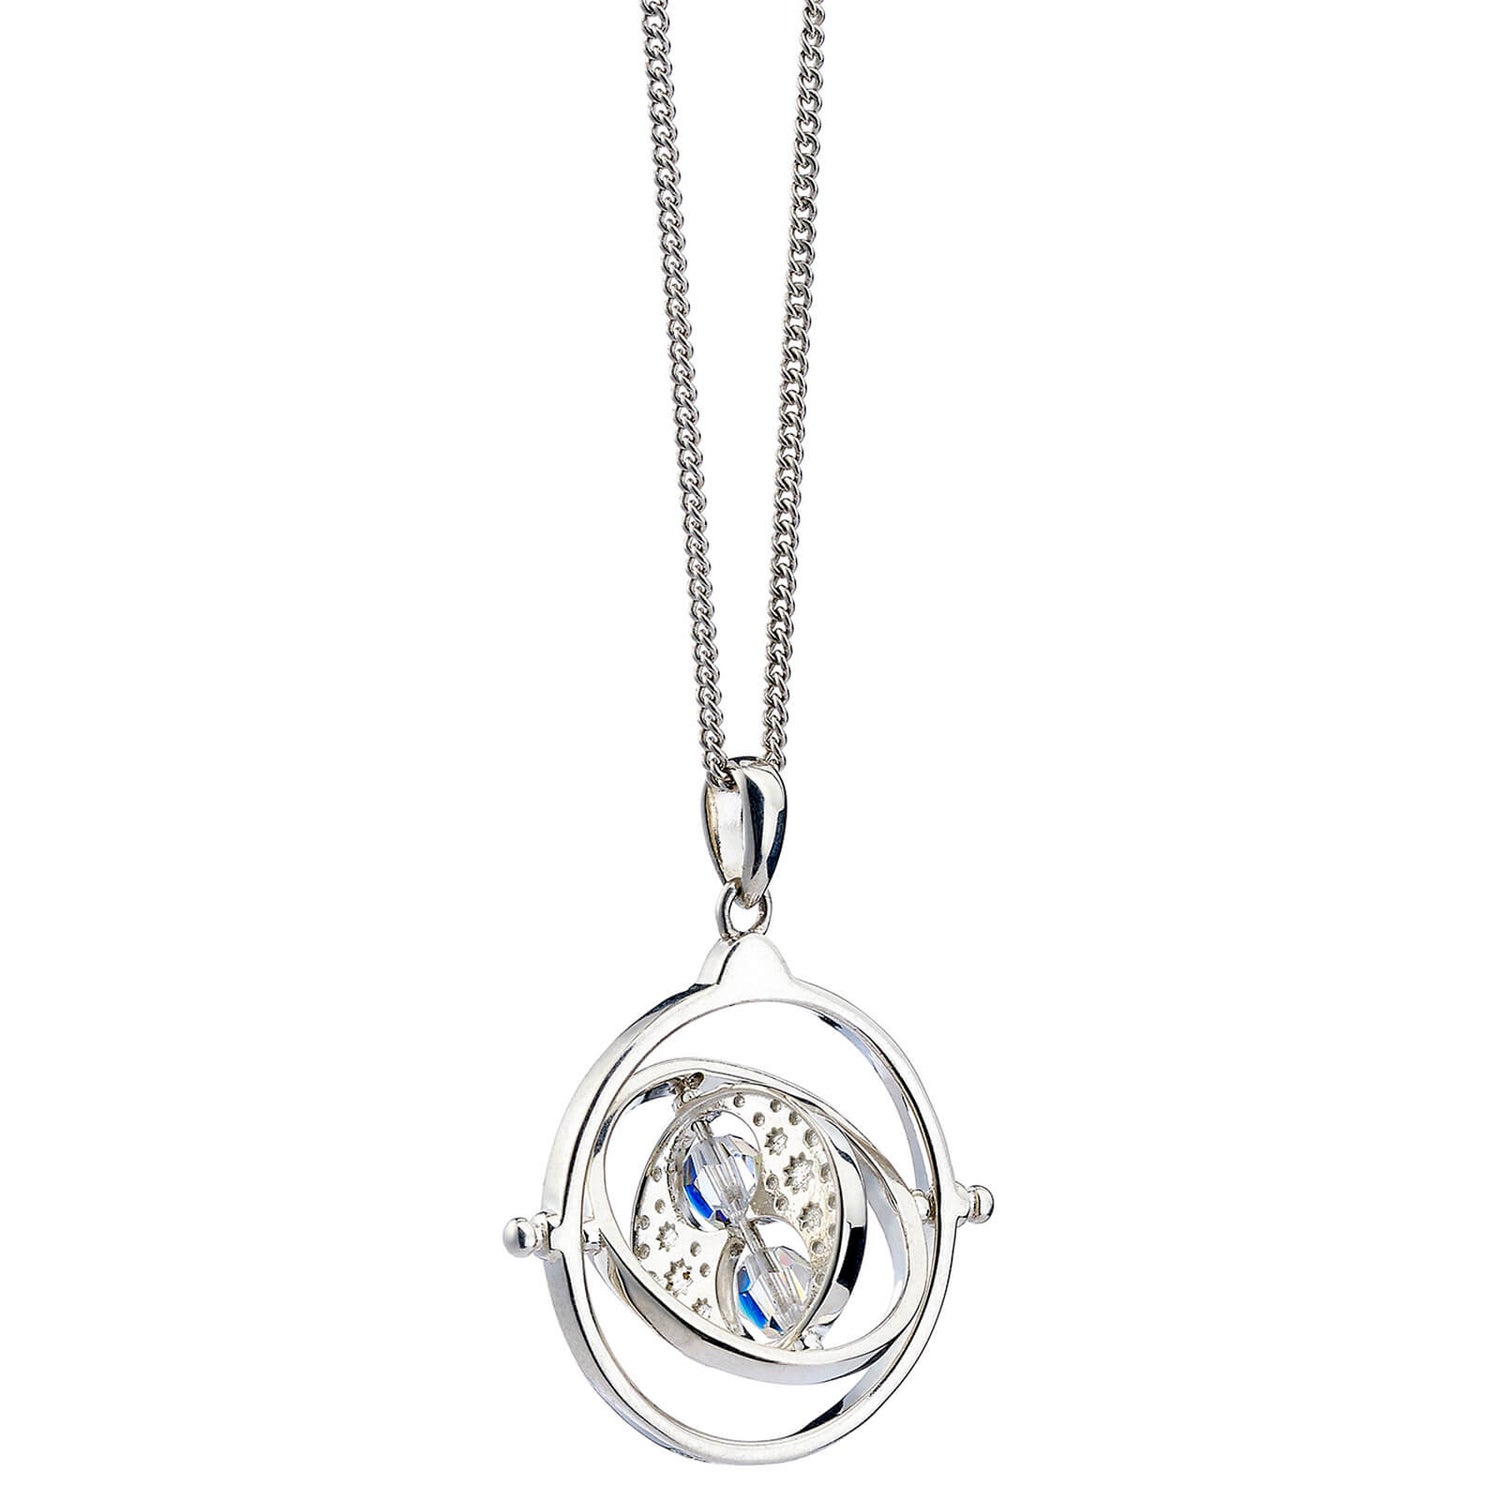 Harry Potter Time Turner Necklace Embellished with Crystals - Silver